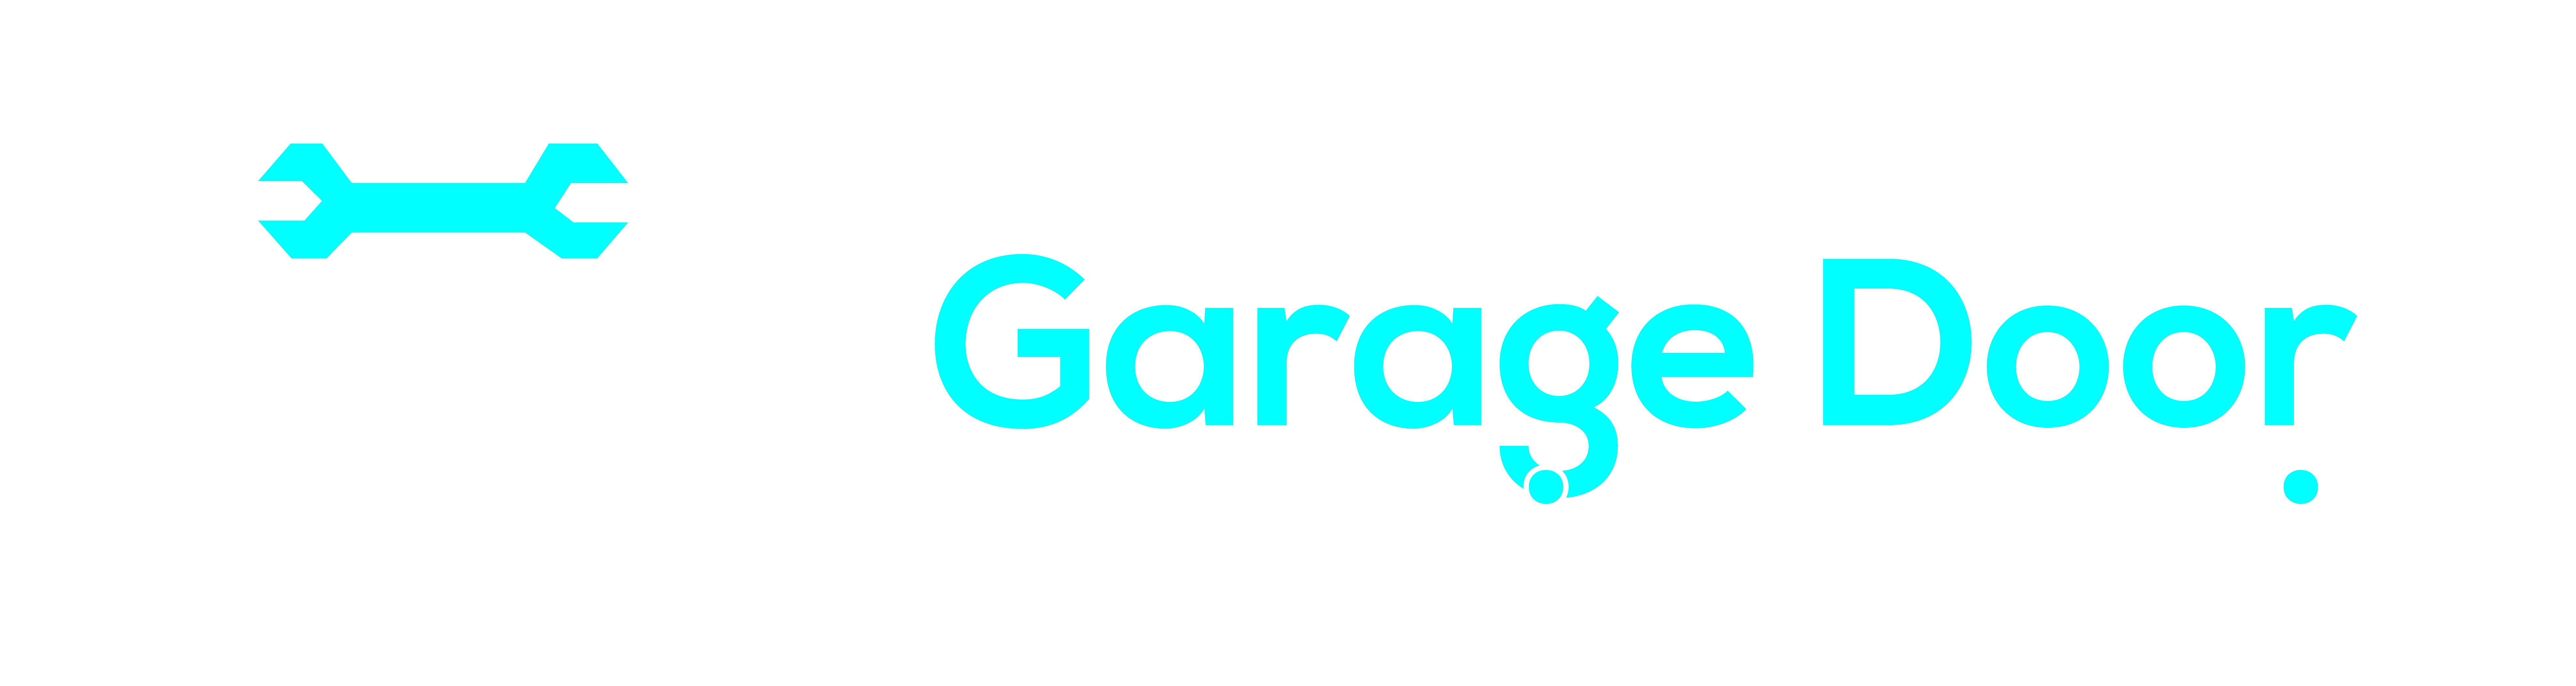 garage door repair ottawa